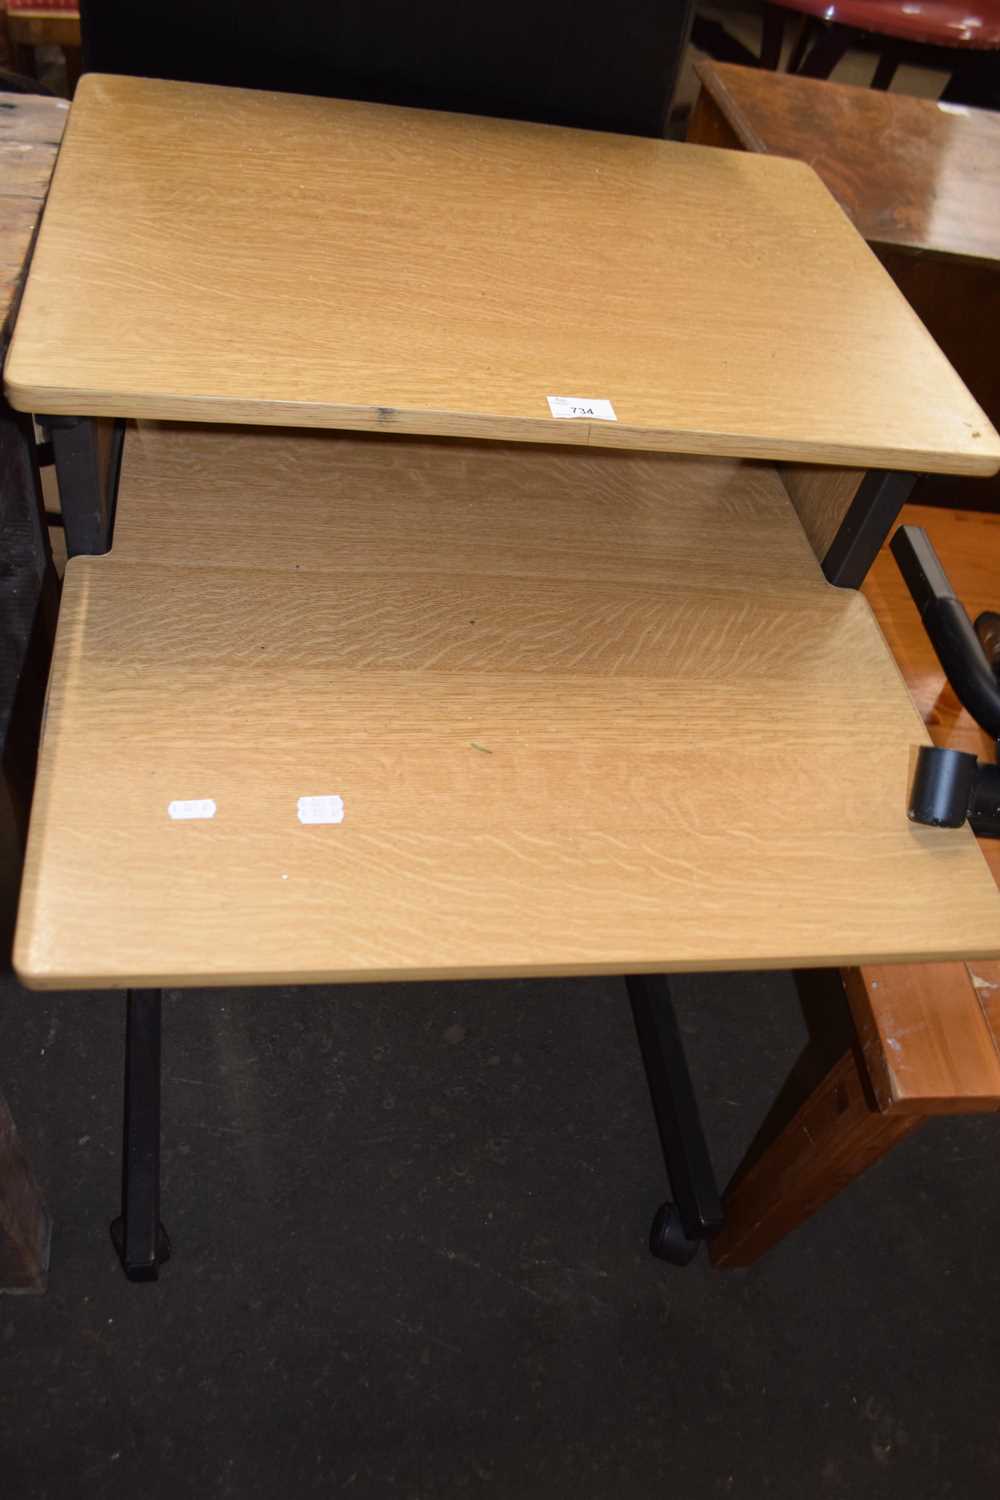 Small light wood finish computer desk